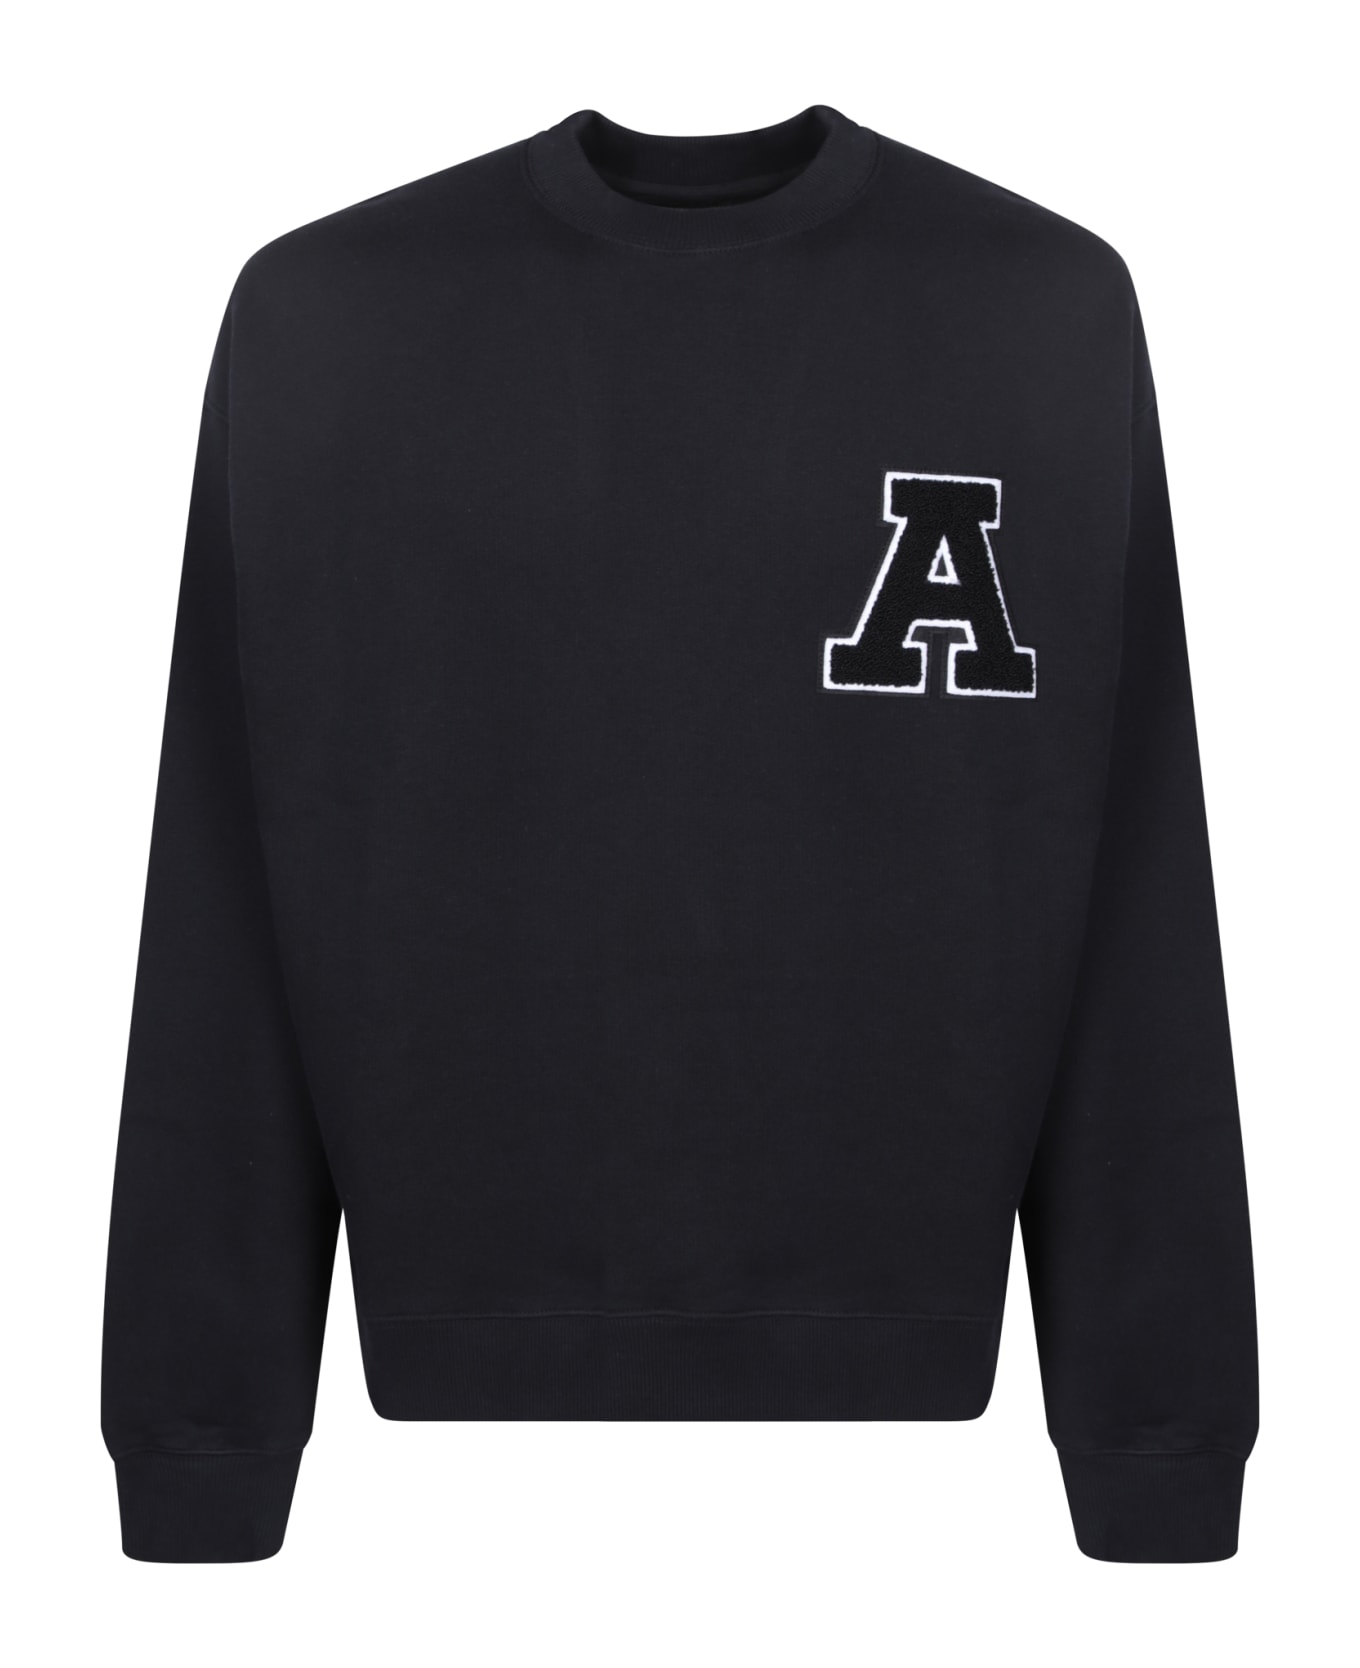 Axel Arigato Team Black Sweatshirt - Black フリース